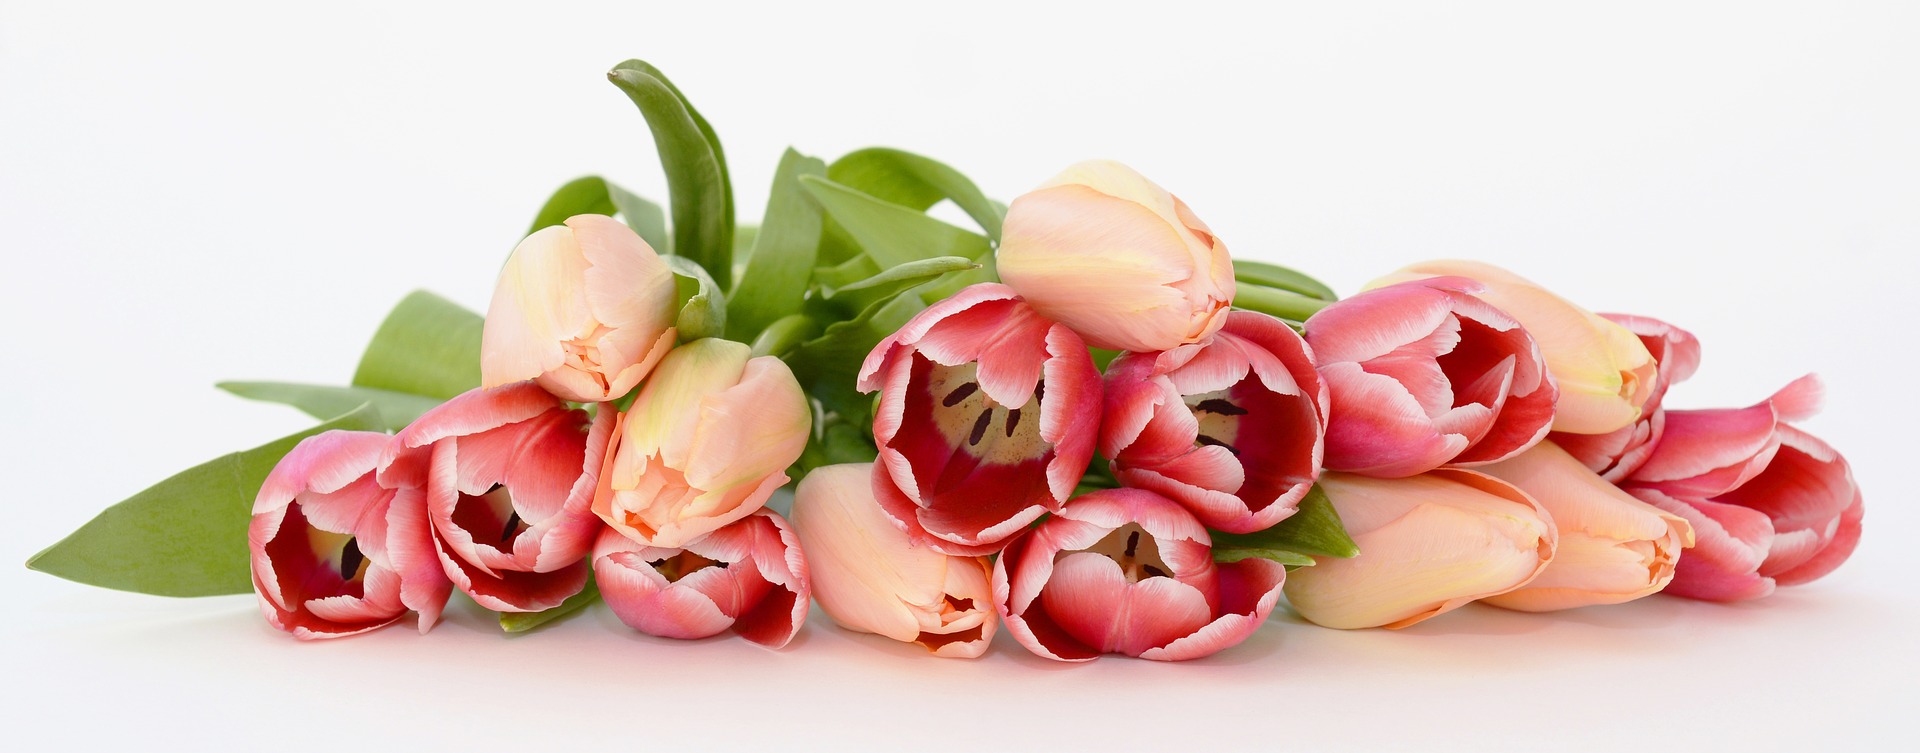 tulips 2152975 1920